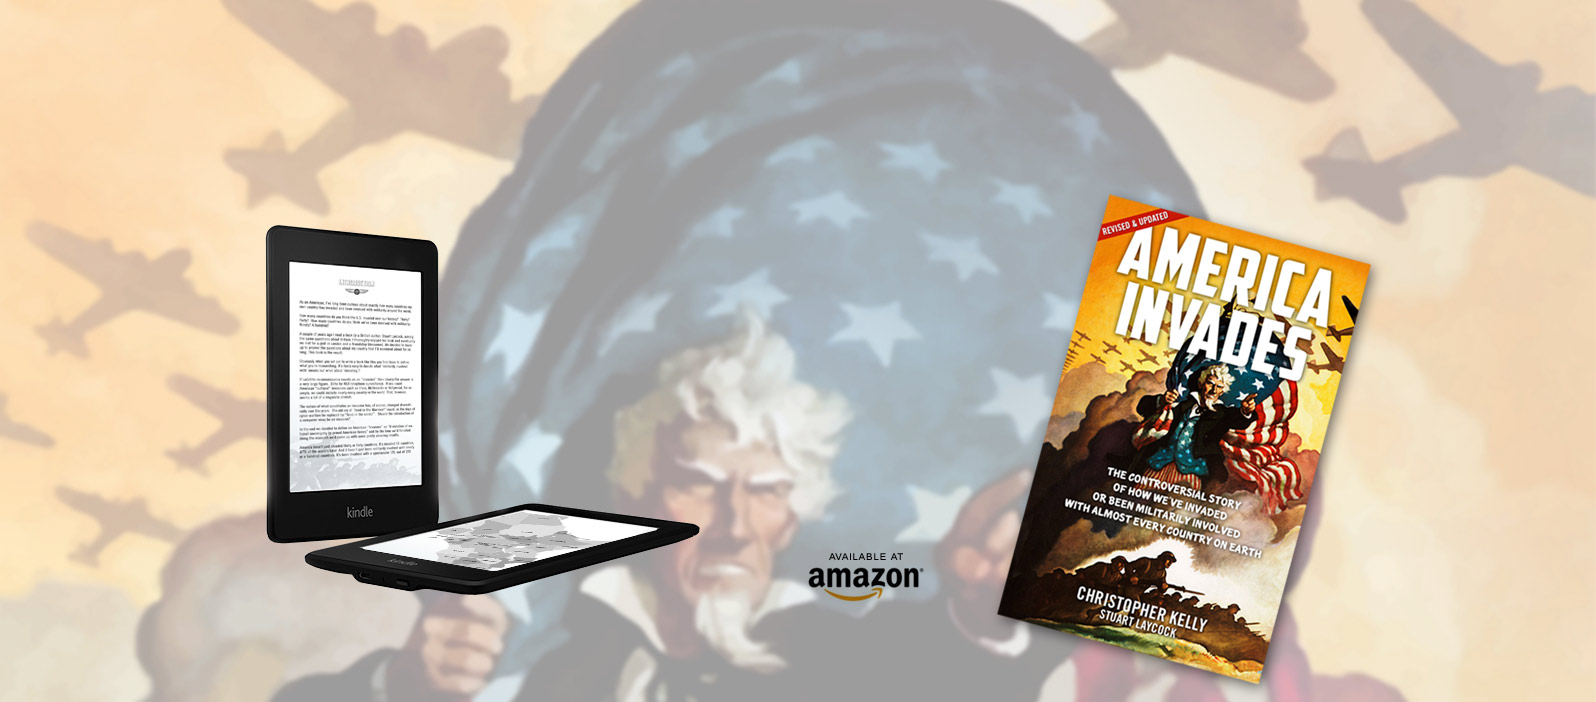 America Invades: Amazon eBook Edition